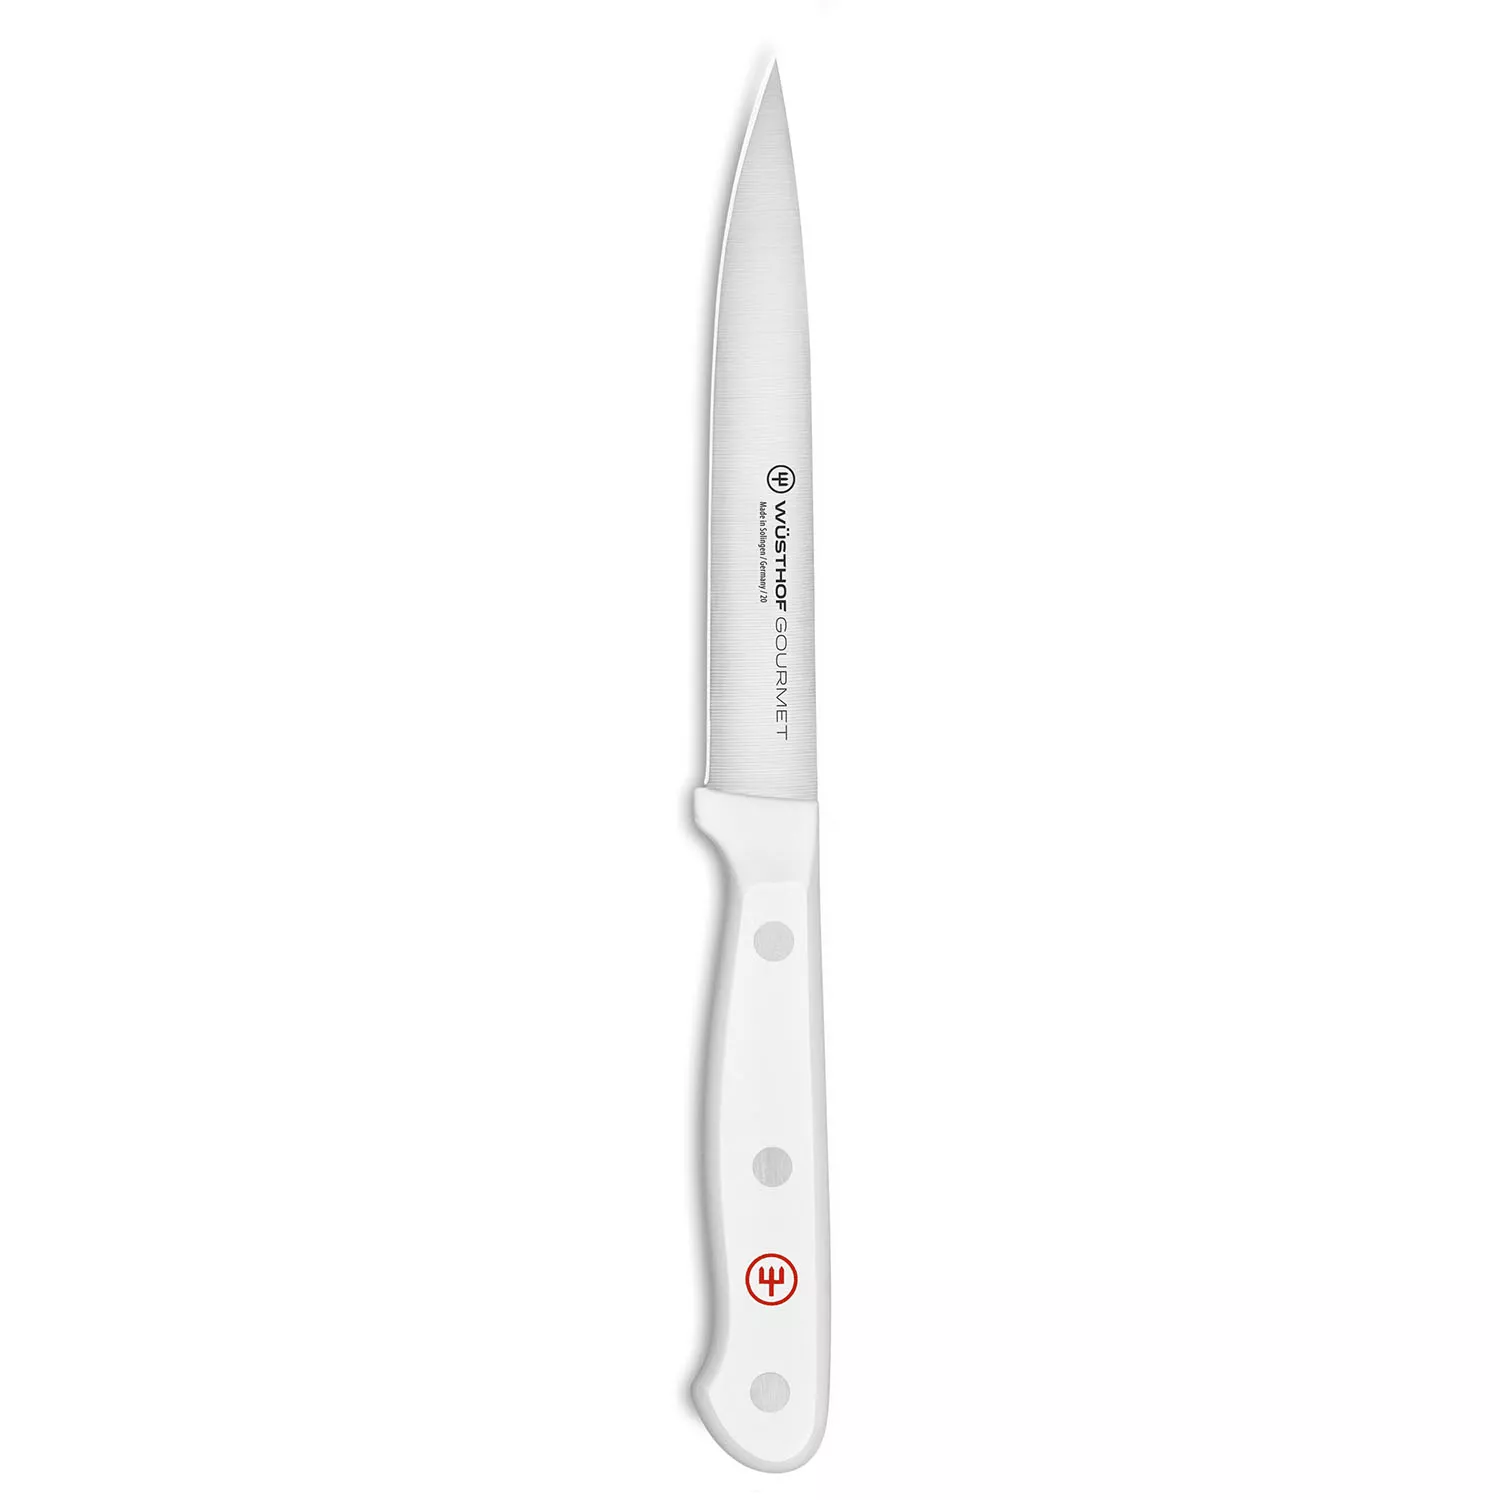 Wüsthof Gourmet Utility Knife, 4.5"